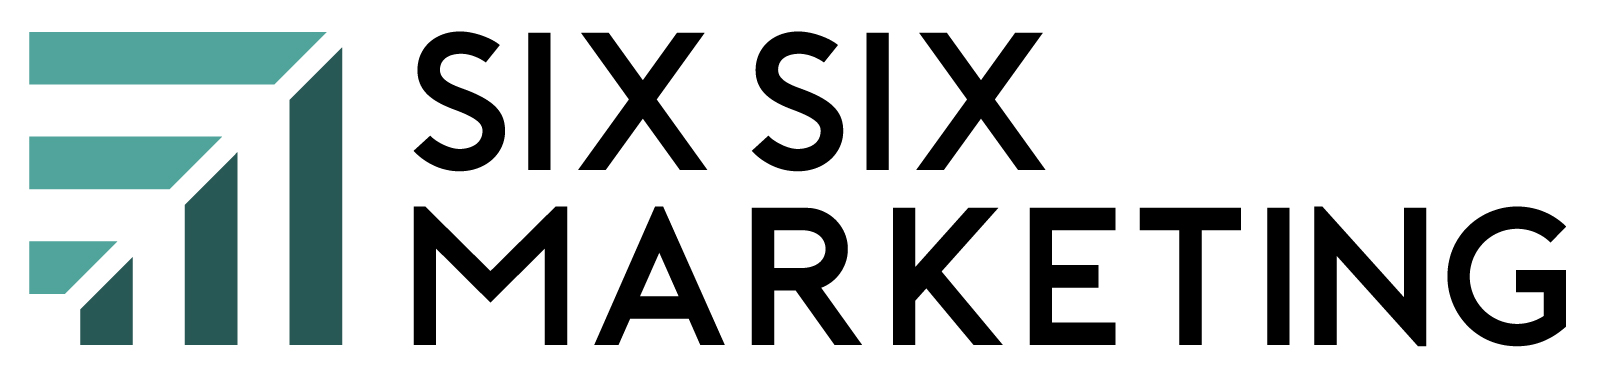 Six Six Marketing